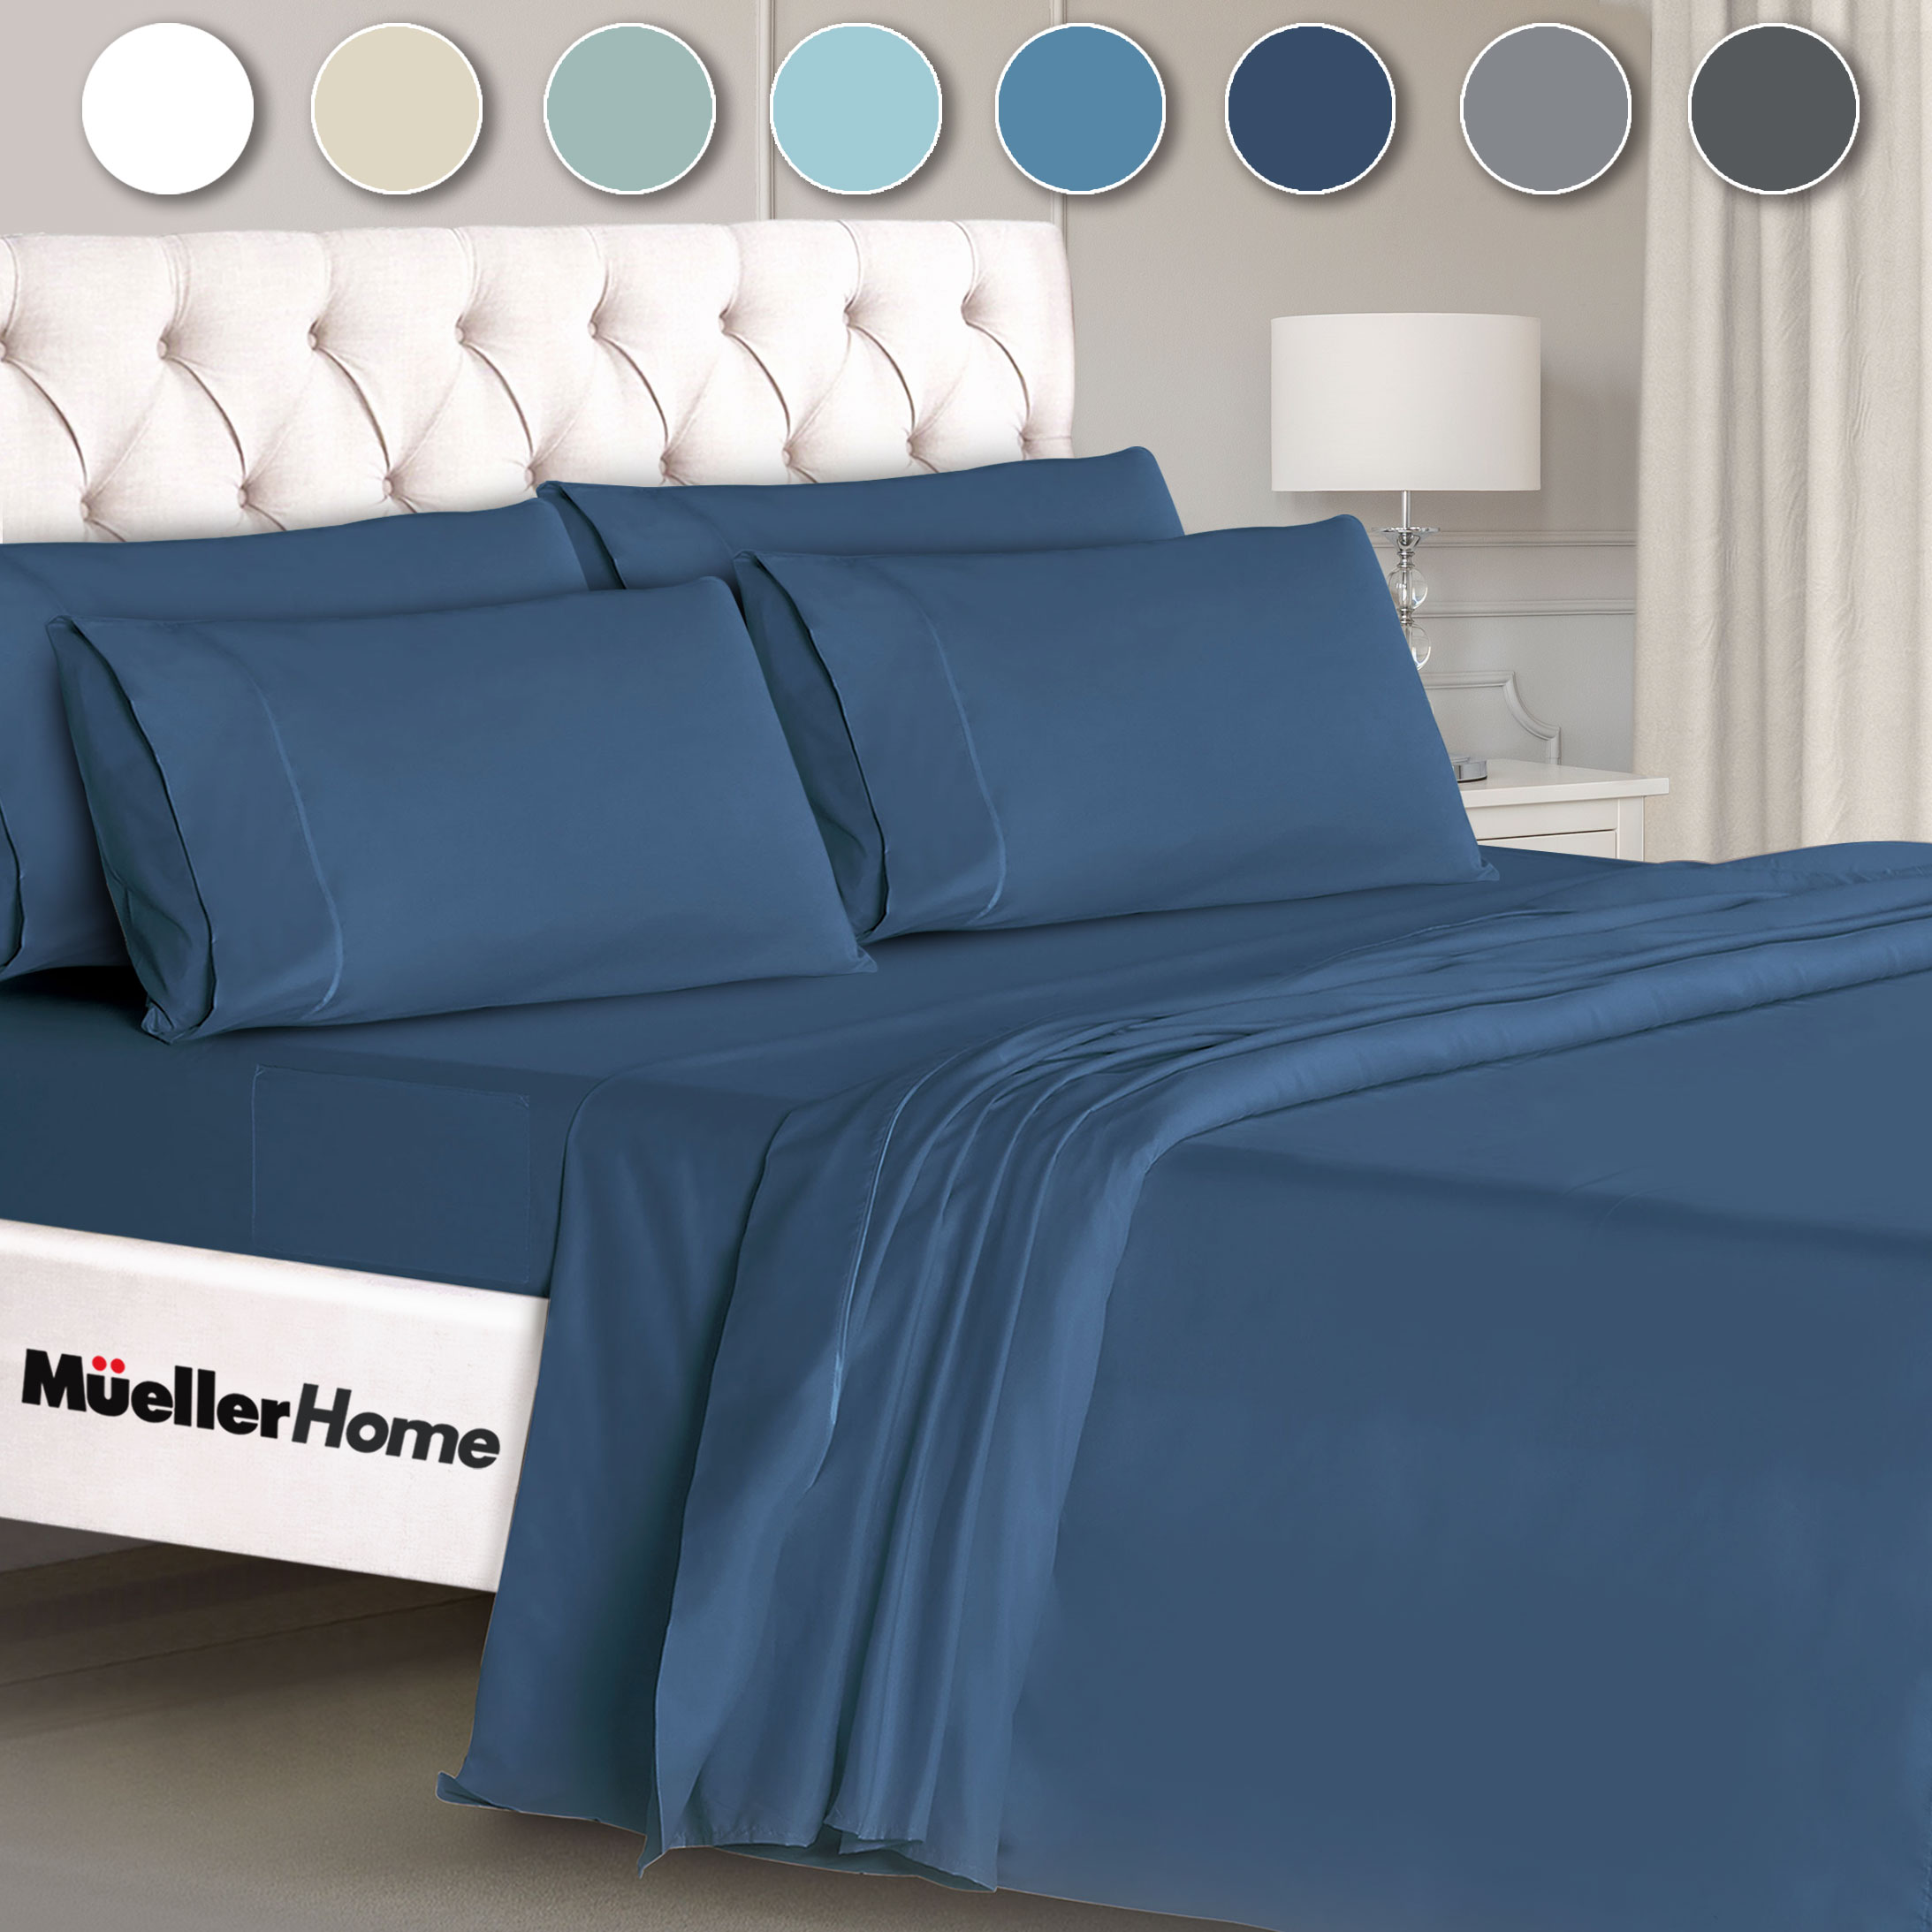 muellerhome_premium-hotel-collection-6-piece-full-size-sheet-set-navy1